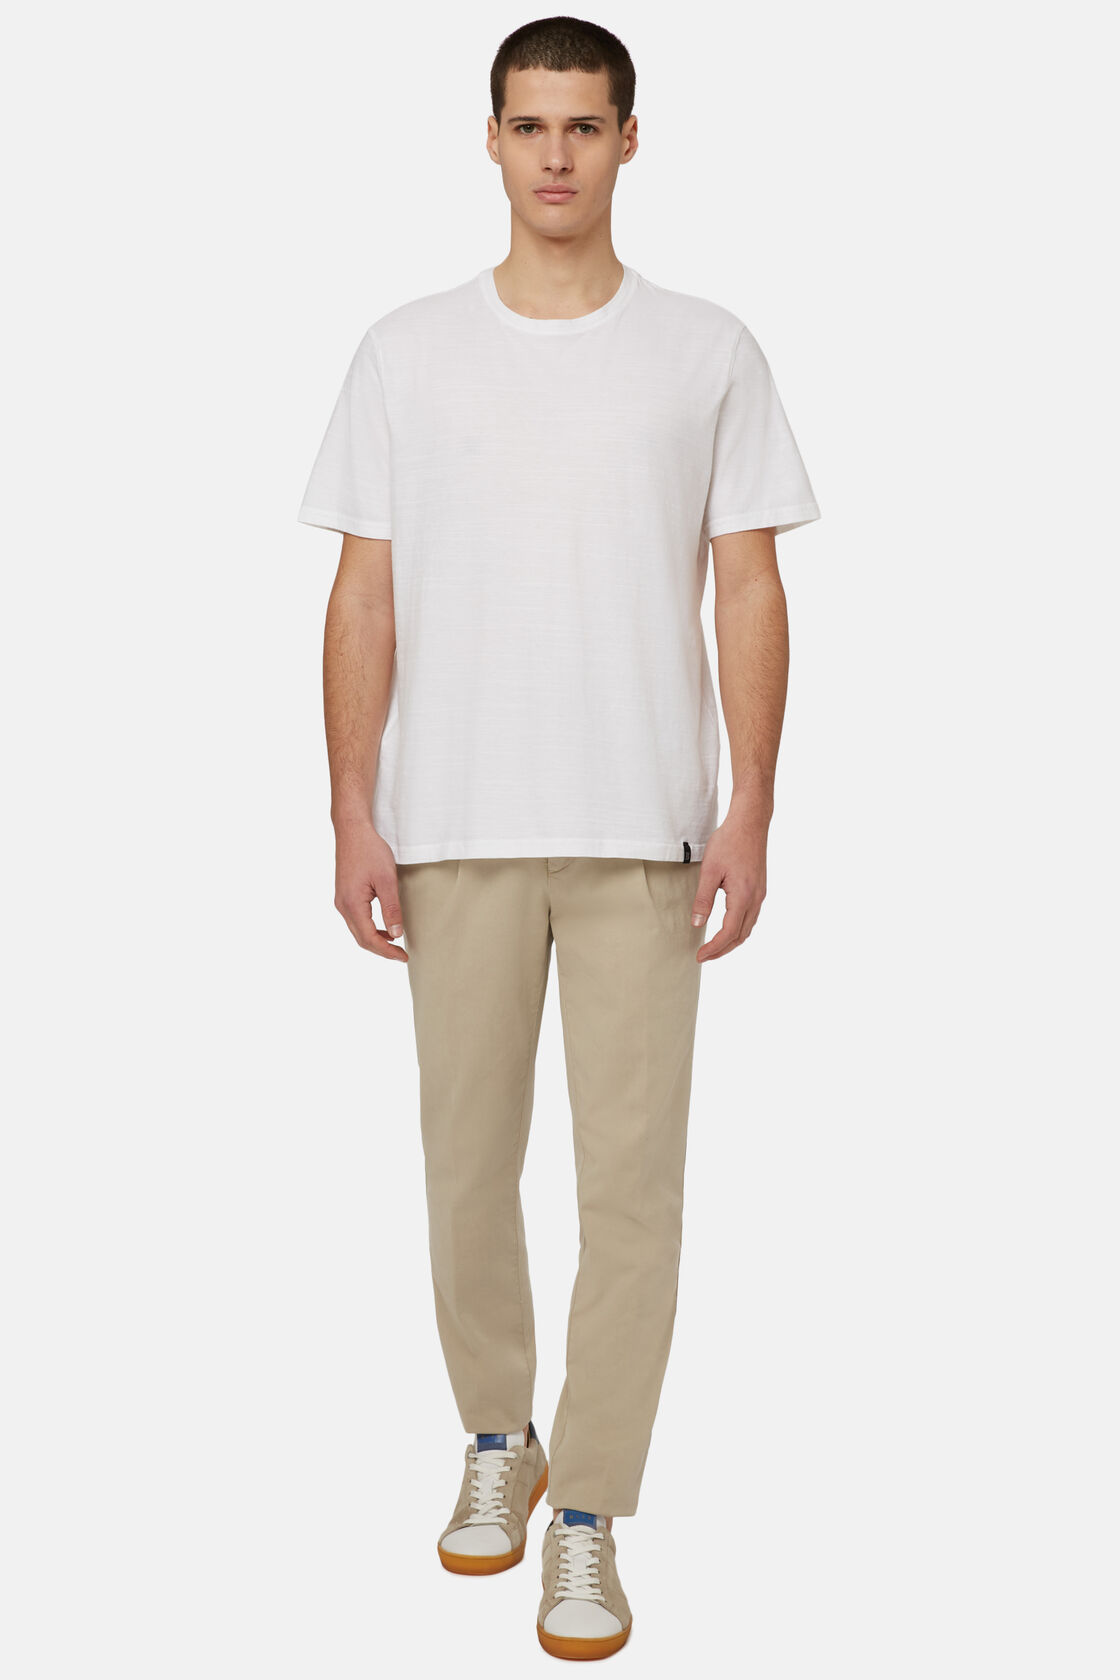 T-Shirt in Cotton Slub Jersey, White, hi-res